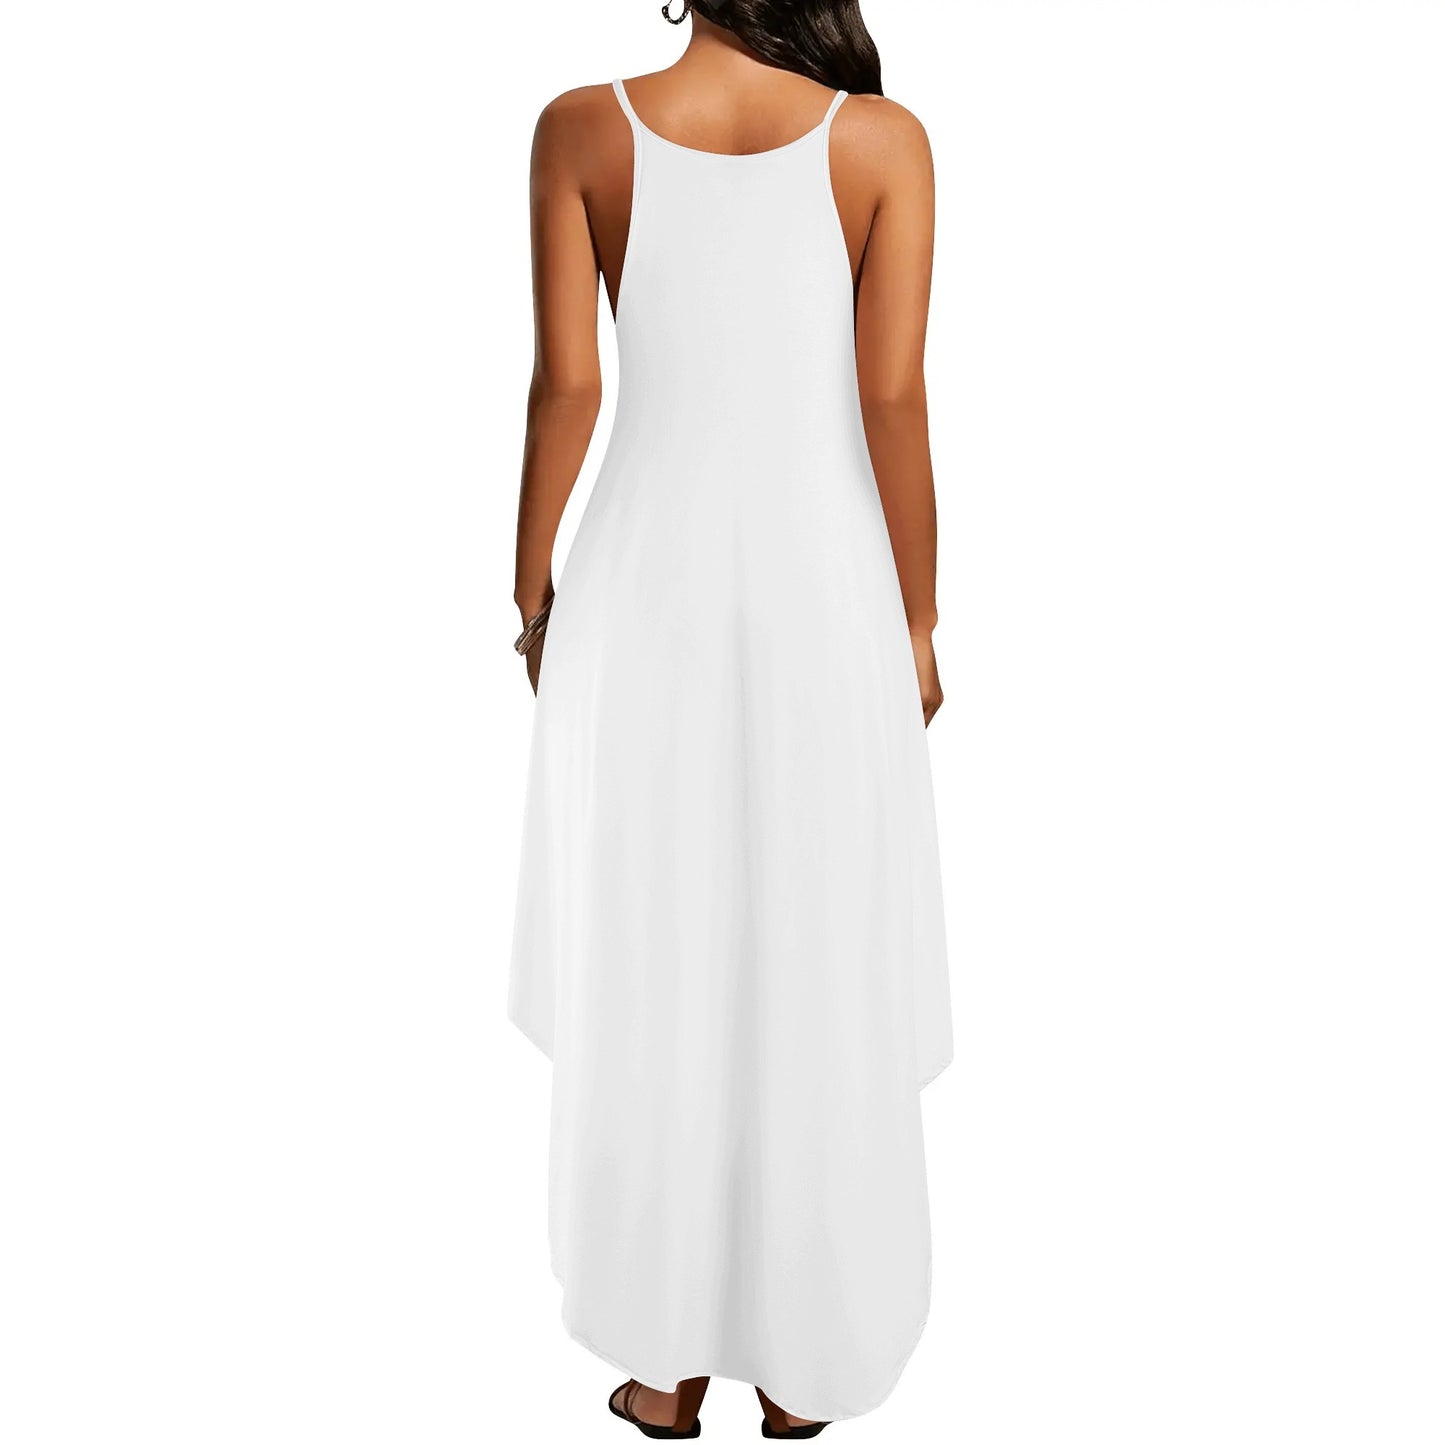 Divinely Inspired Purposefully Created Womens Christian Elegant Sleeveless Summer Maxi Dress popcustoms